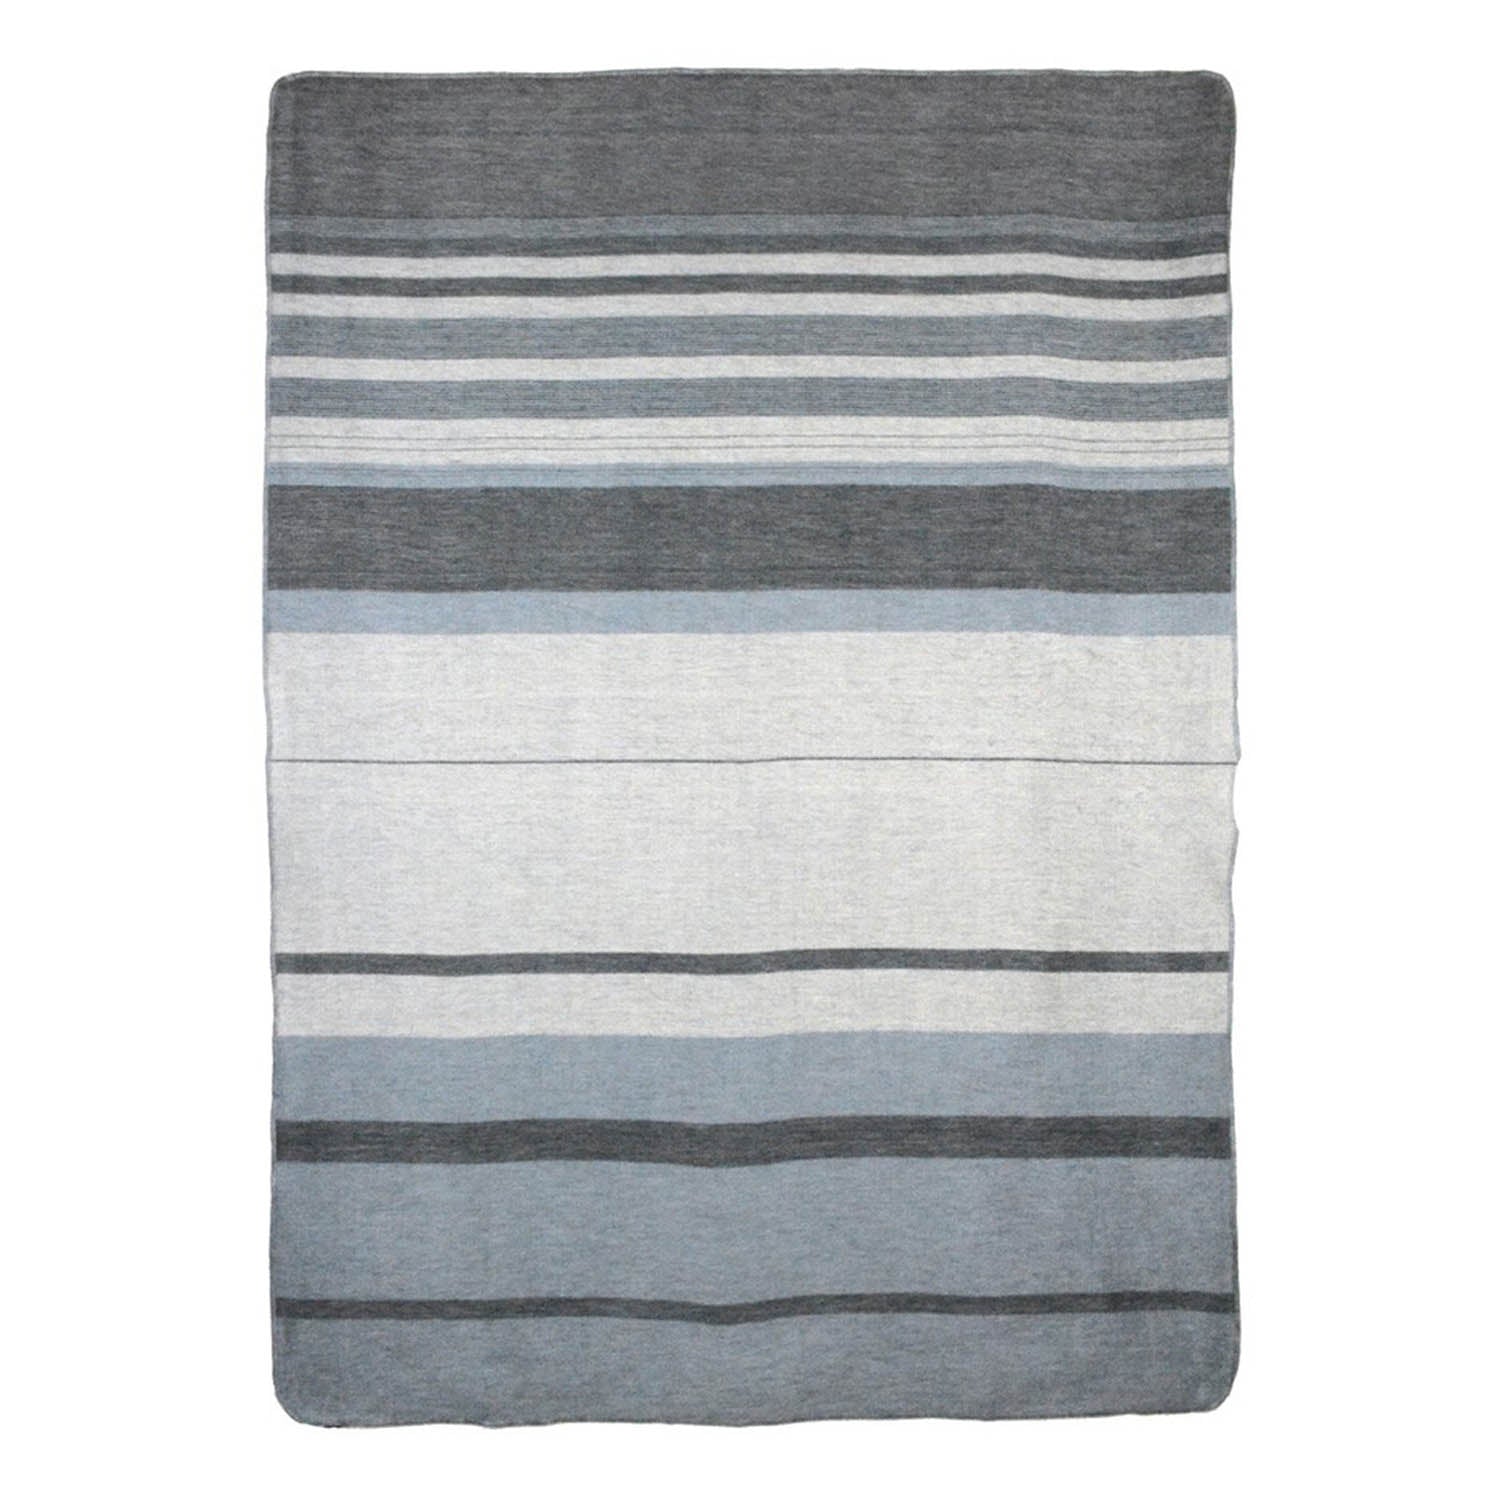 grey and blue striped alpaca blanket